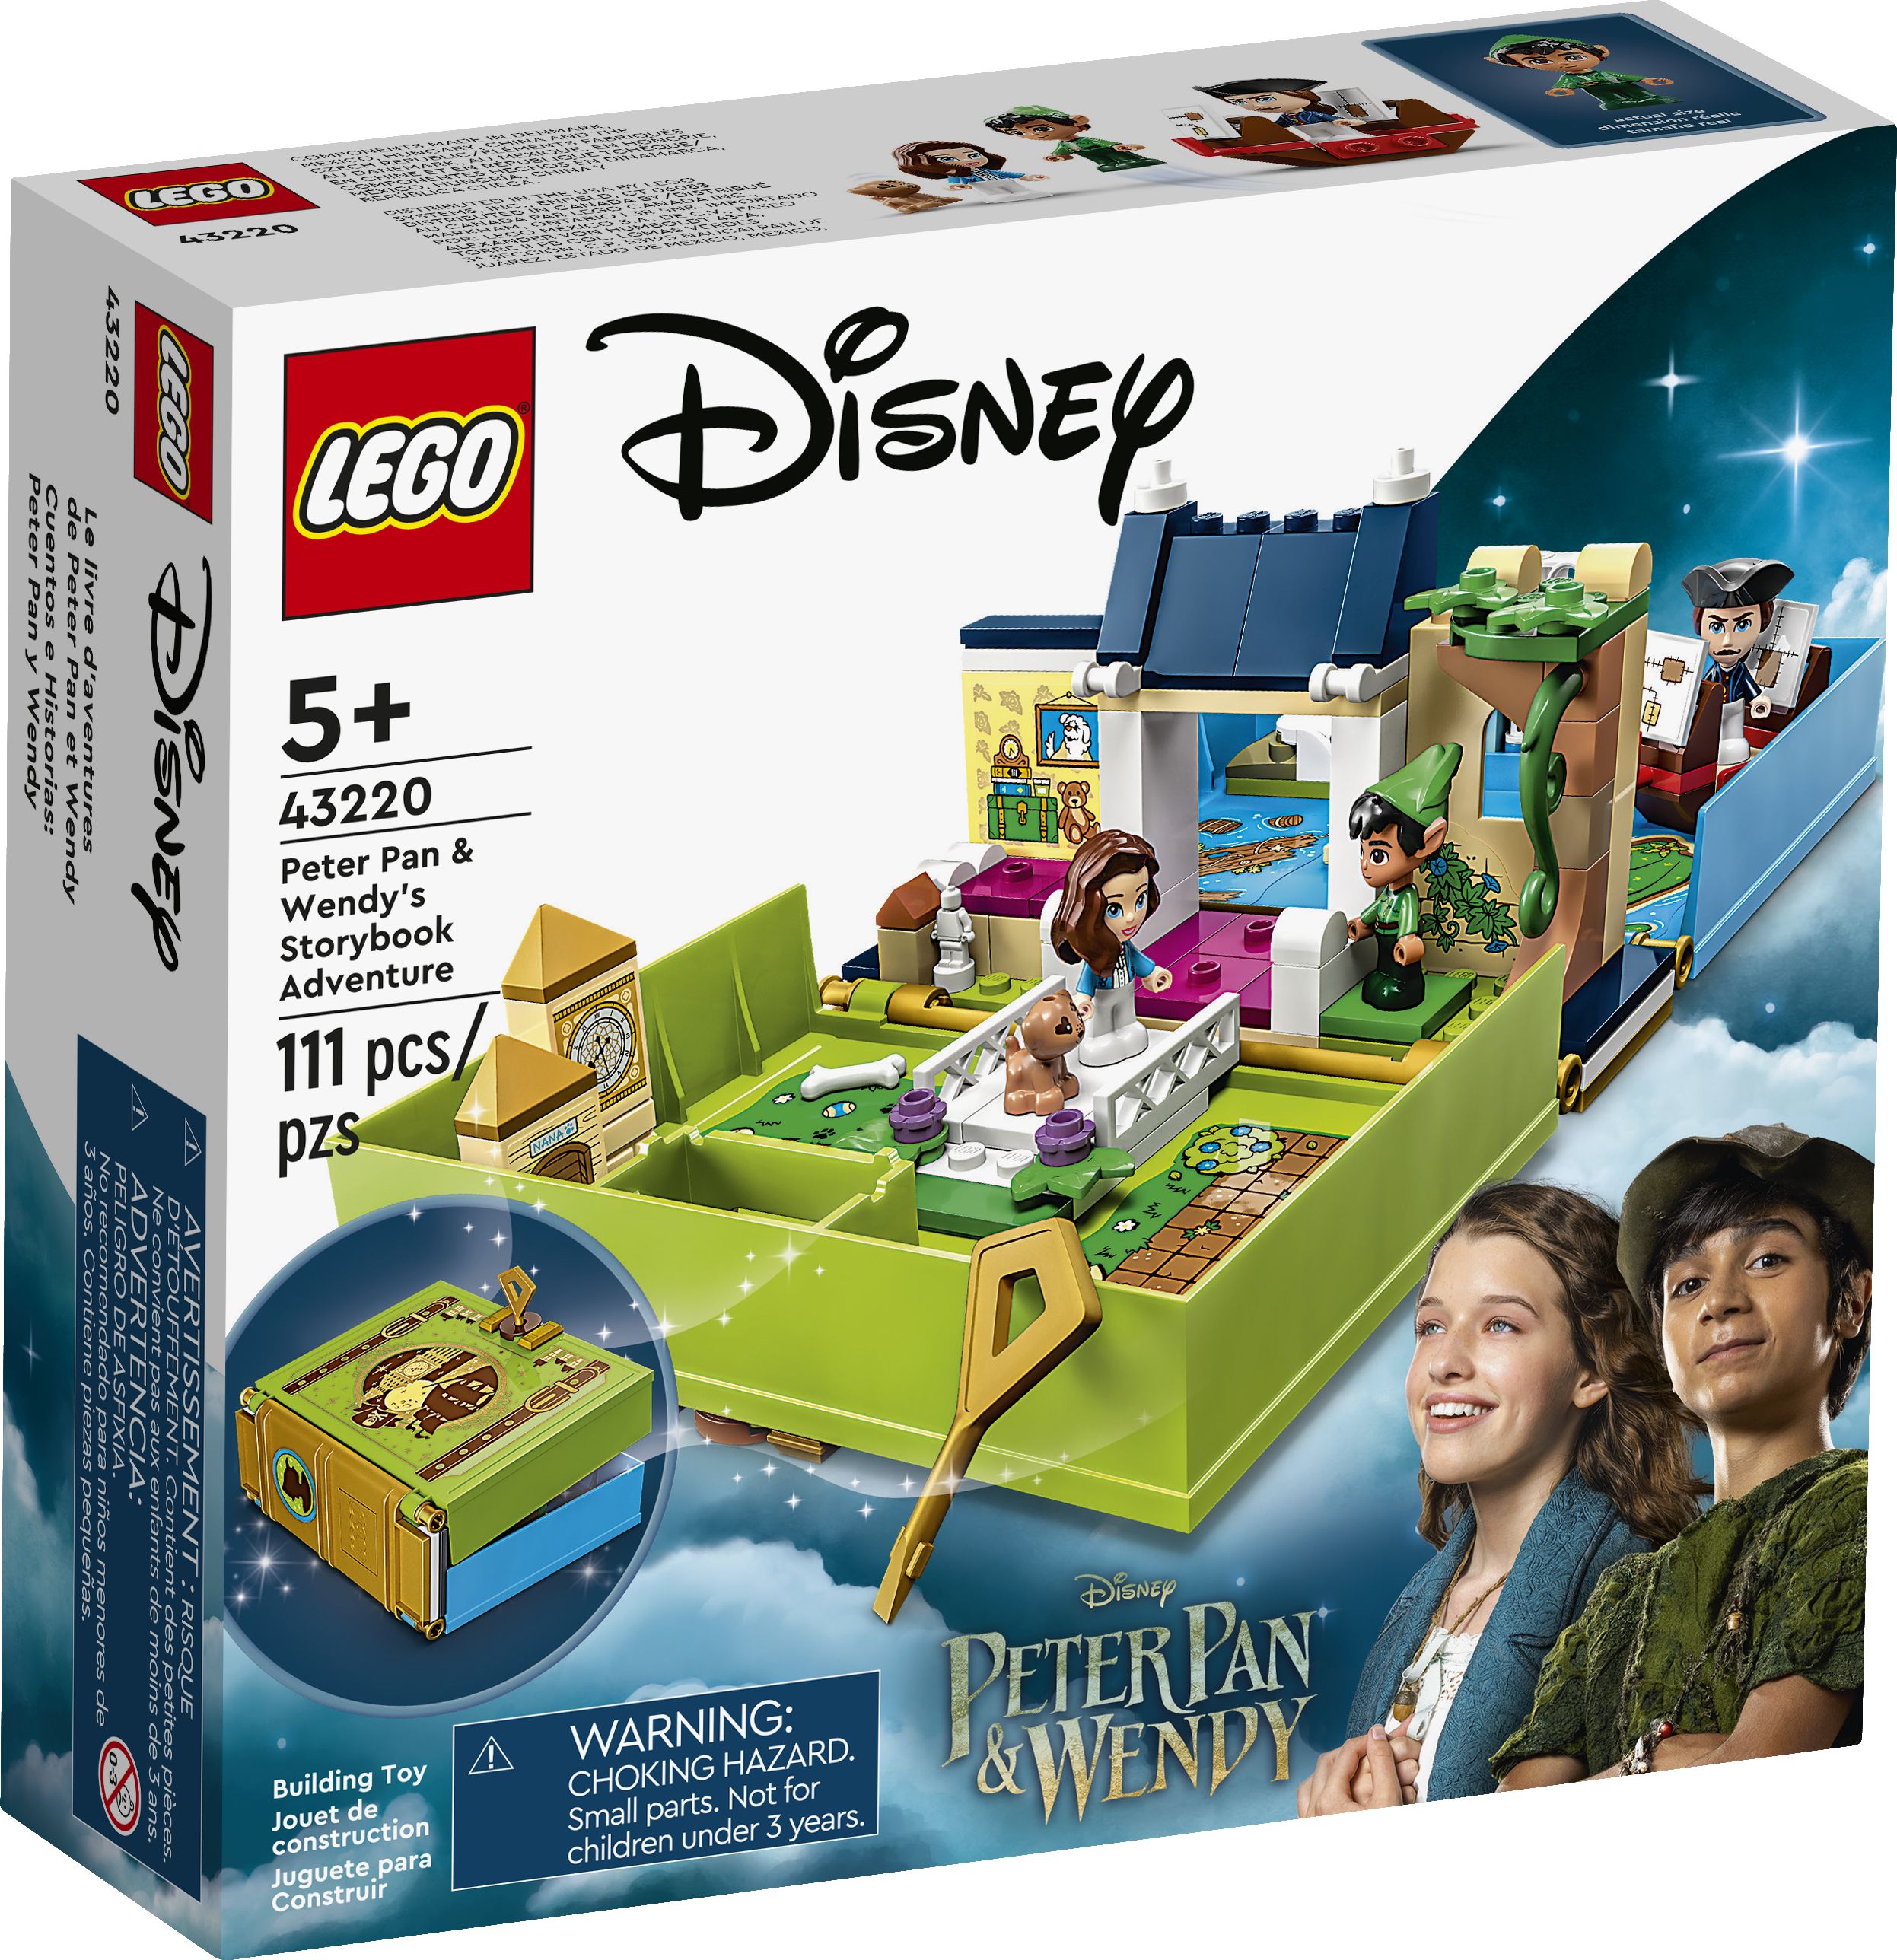 LEGO Disney 43220 Peter Pan & Wendy – Märchenbuch-Abenteuer LEGO_43220_Box1_v39.jpg